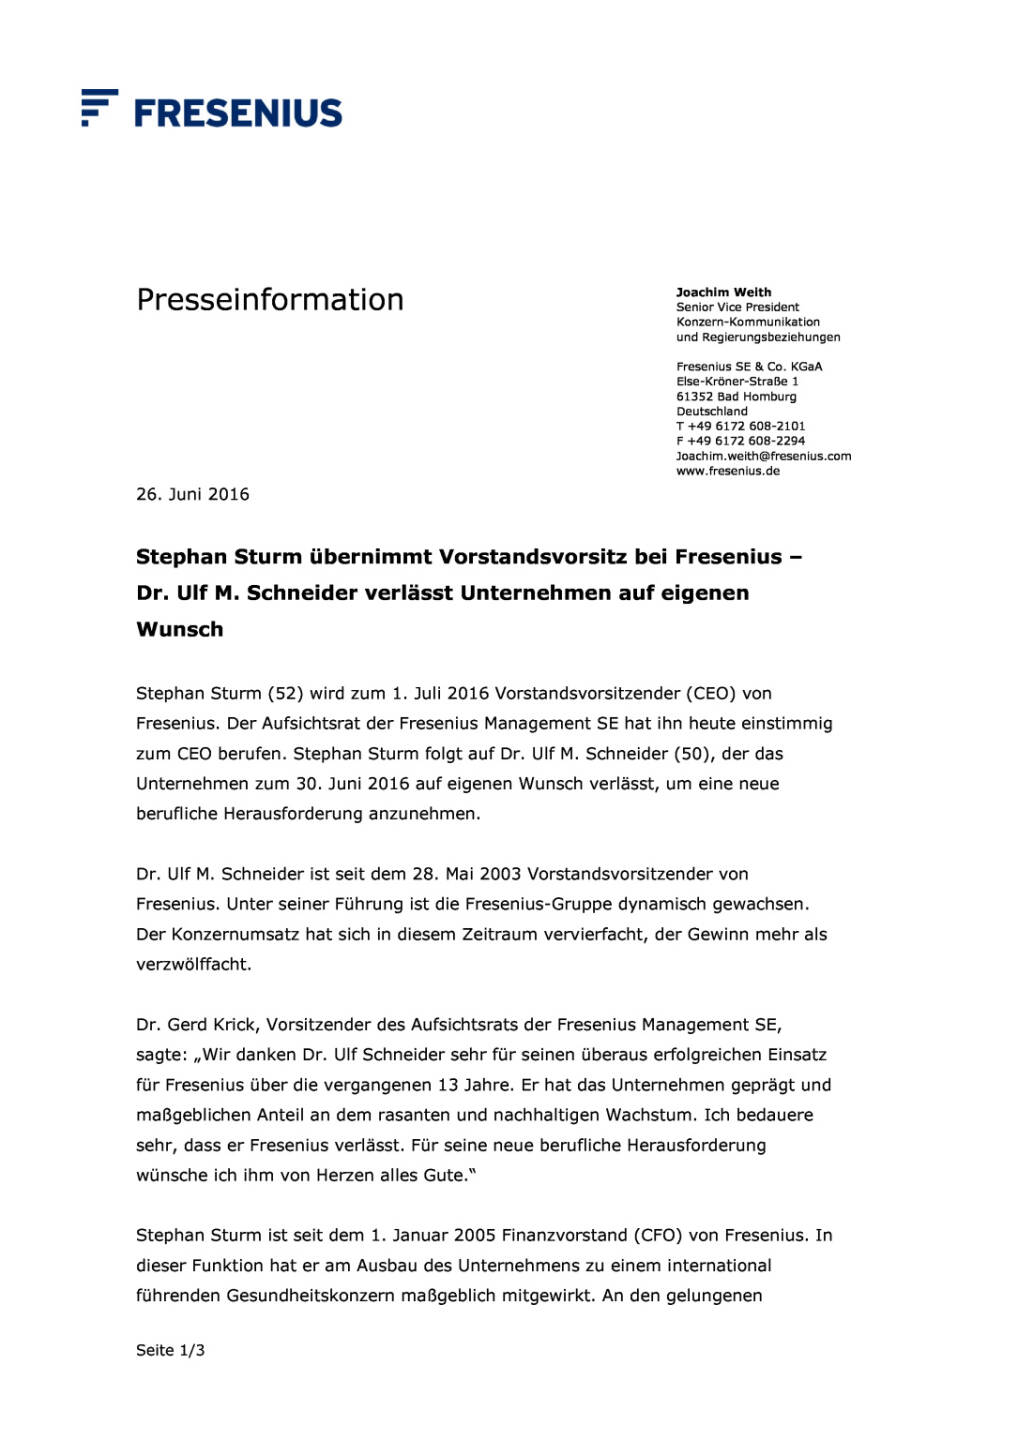 Stephan Sturm übernimmt Vorstandsvorsitz bei Fresenius, Seite 1/3, komplettes Dokument unter http://boerse-social.com/static/uploads/file_1279_stephan_sturm_übernimmt_vorstandsvorsitz_bei_fresenius.pdf